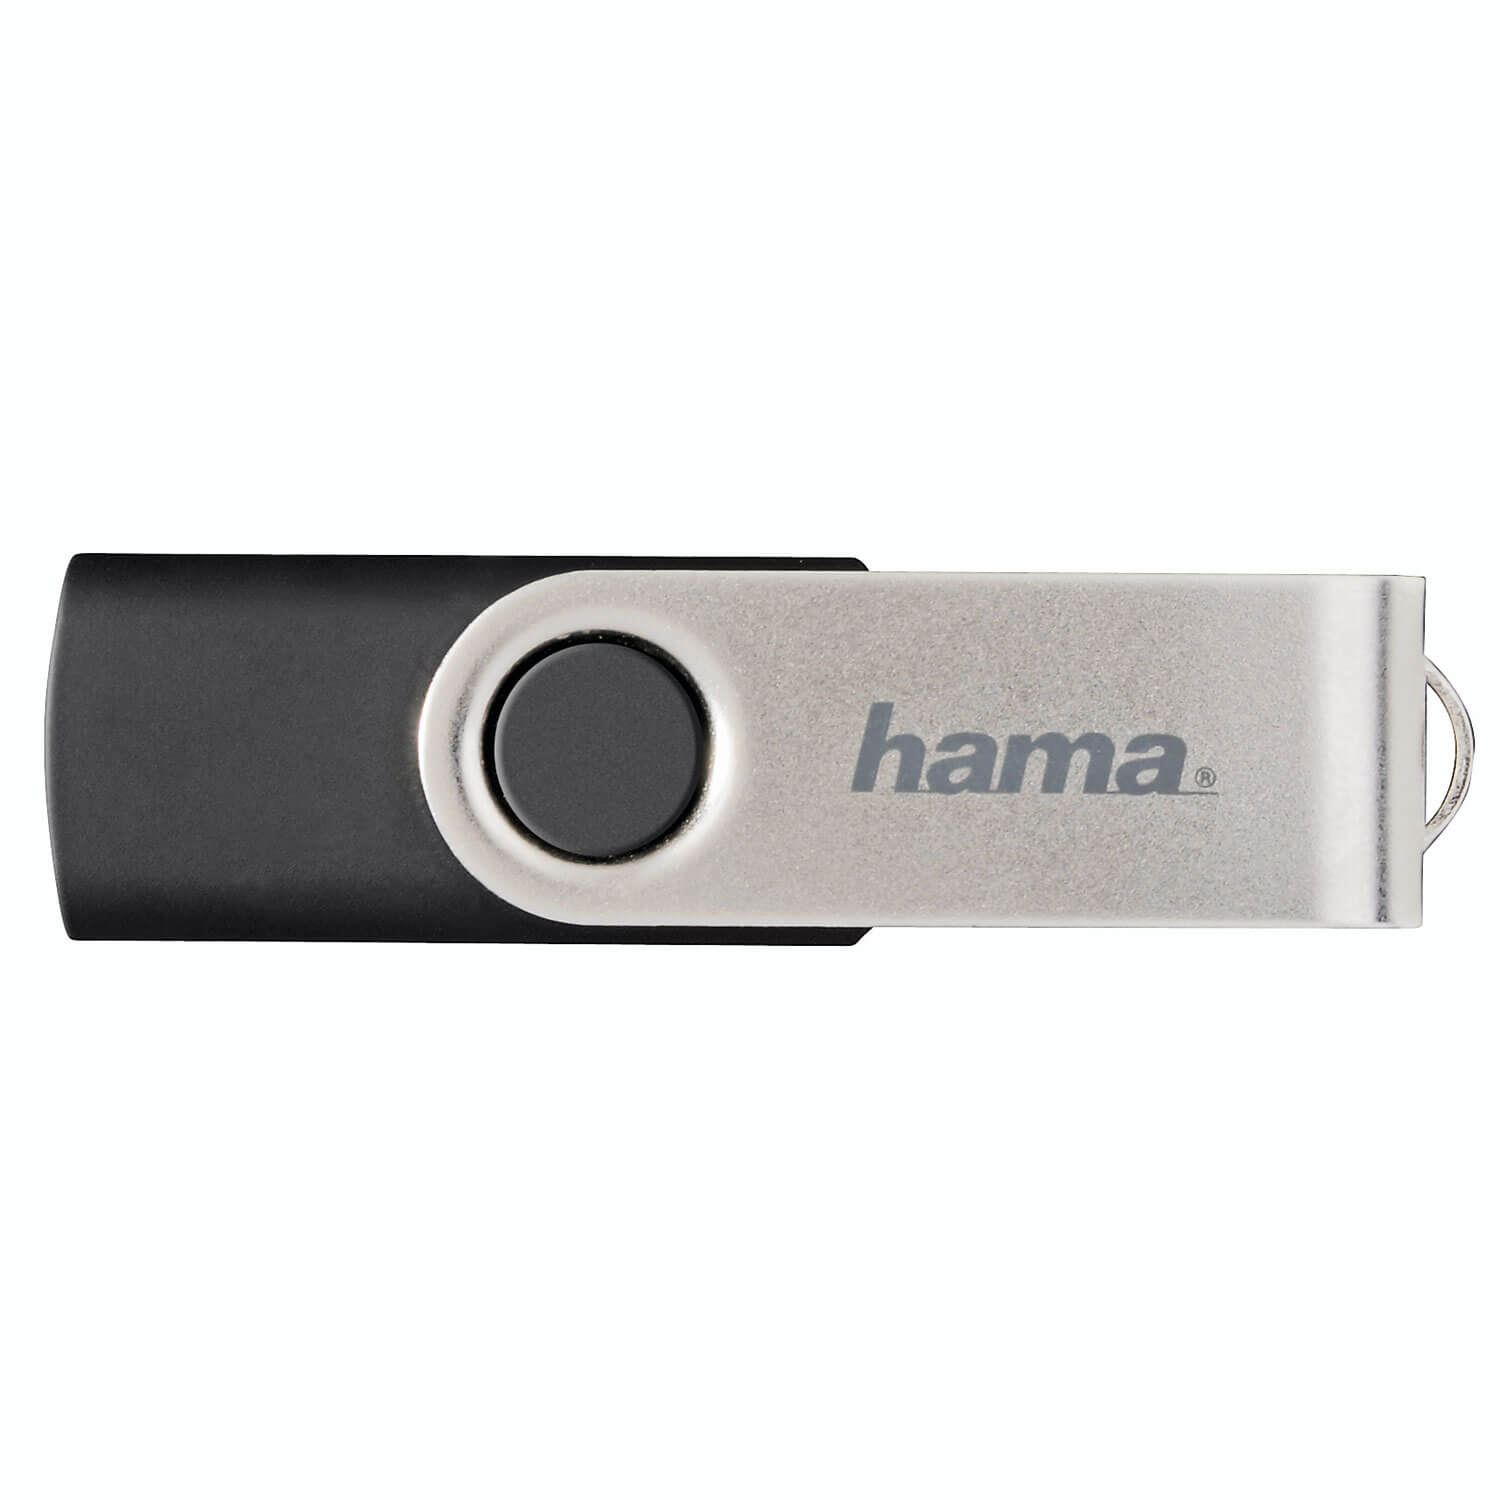  Memorie USB Hama Rotate 90891, 8GB, USB 2.0, Negru 